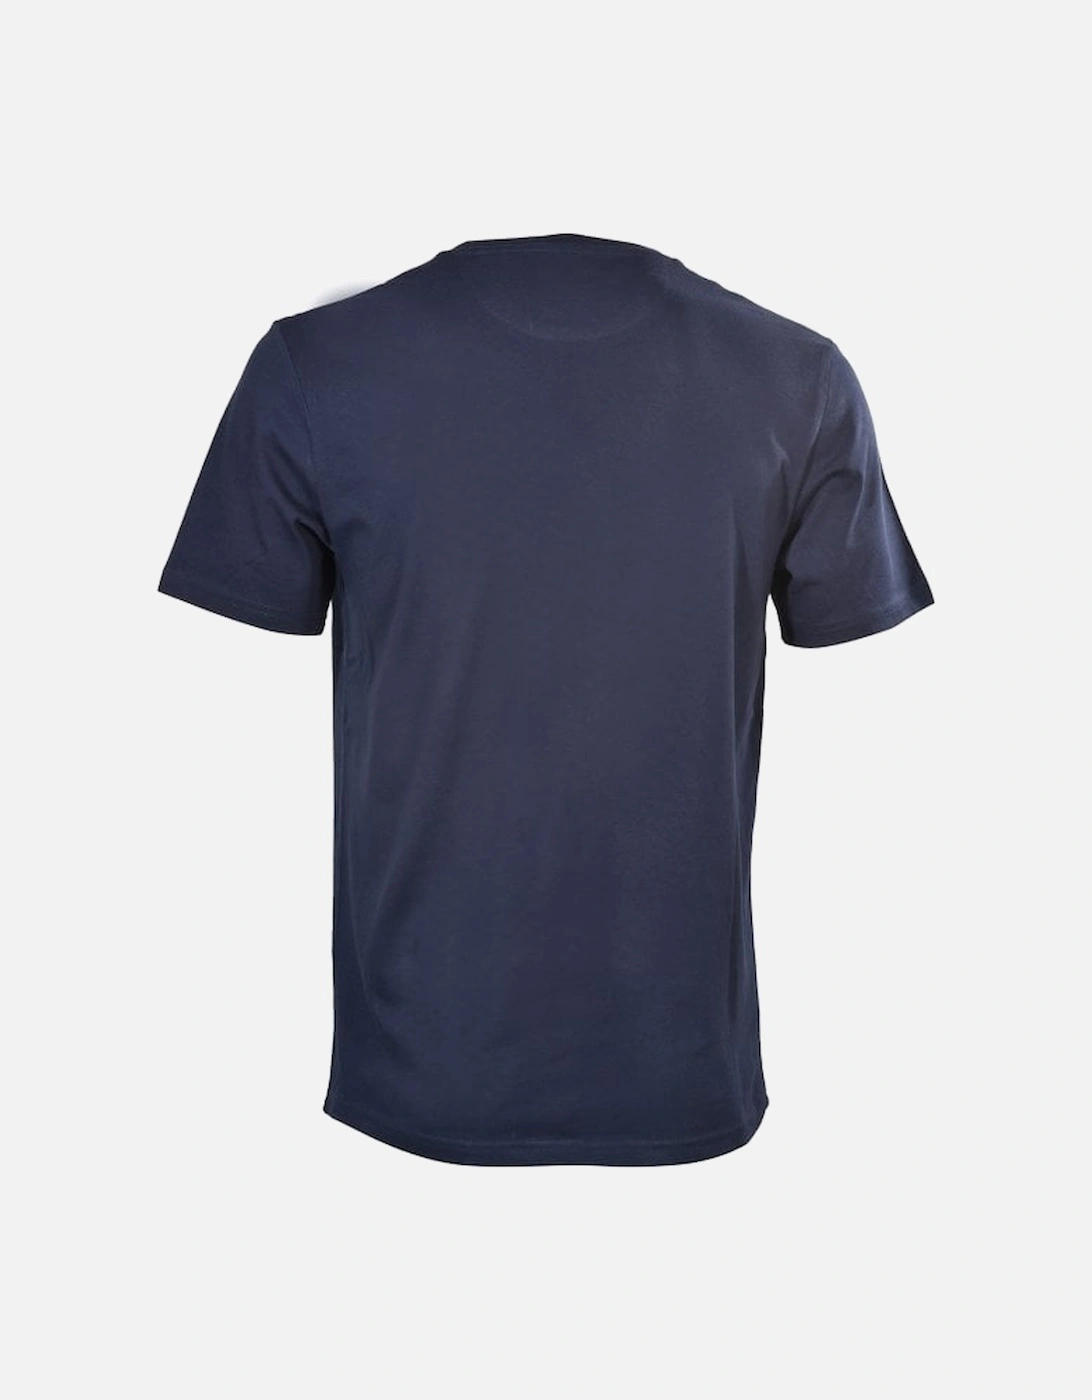 Arrowhead T-Shirt, Ink Blue